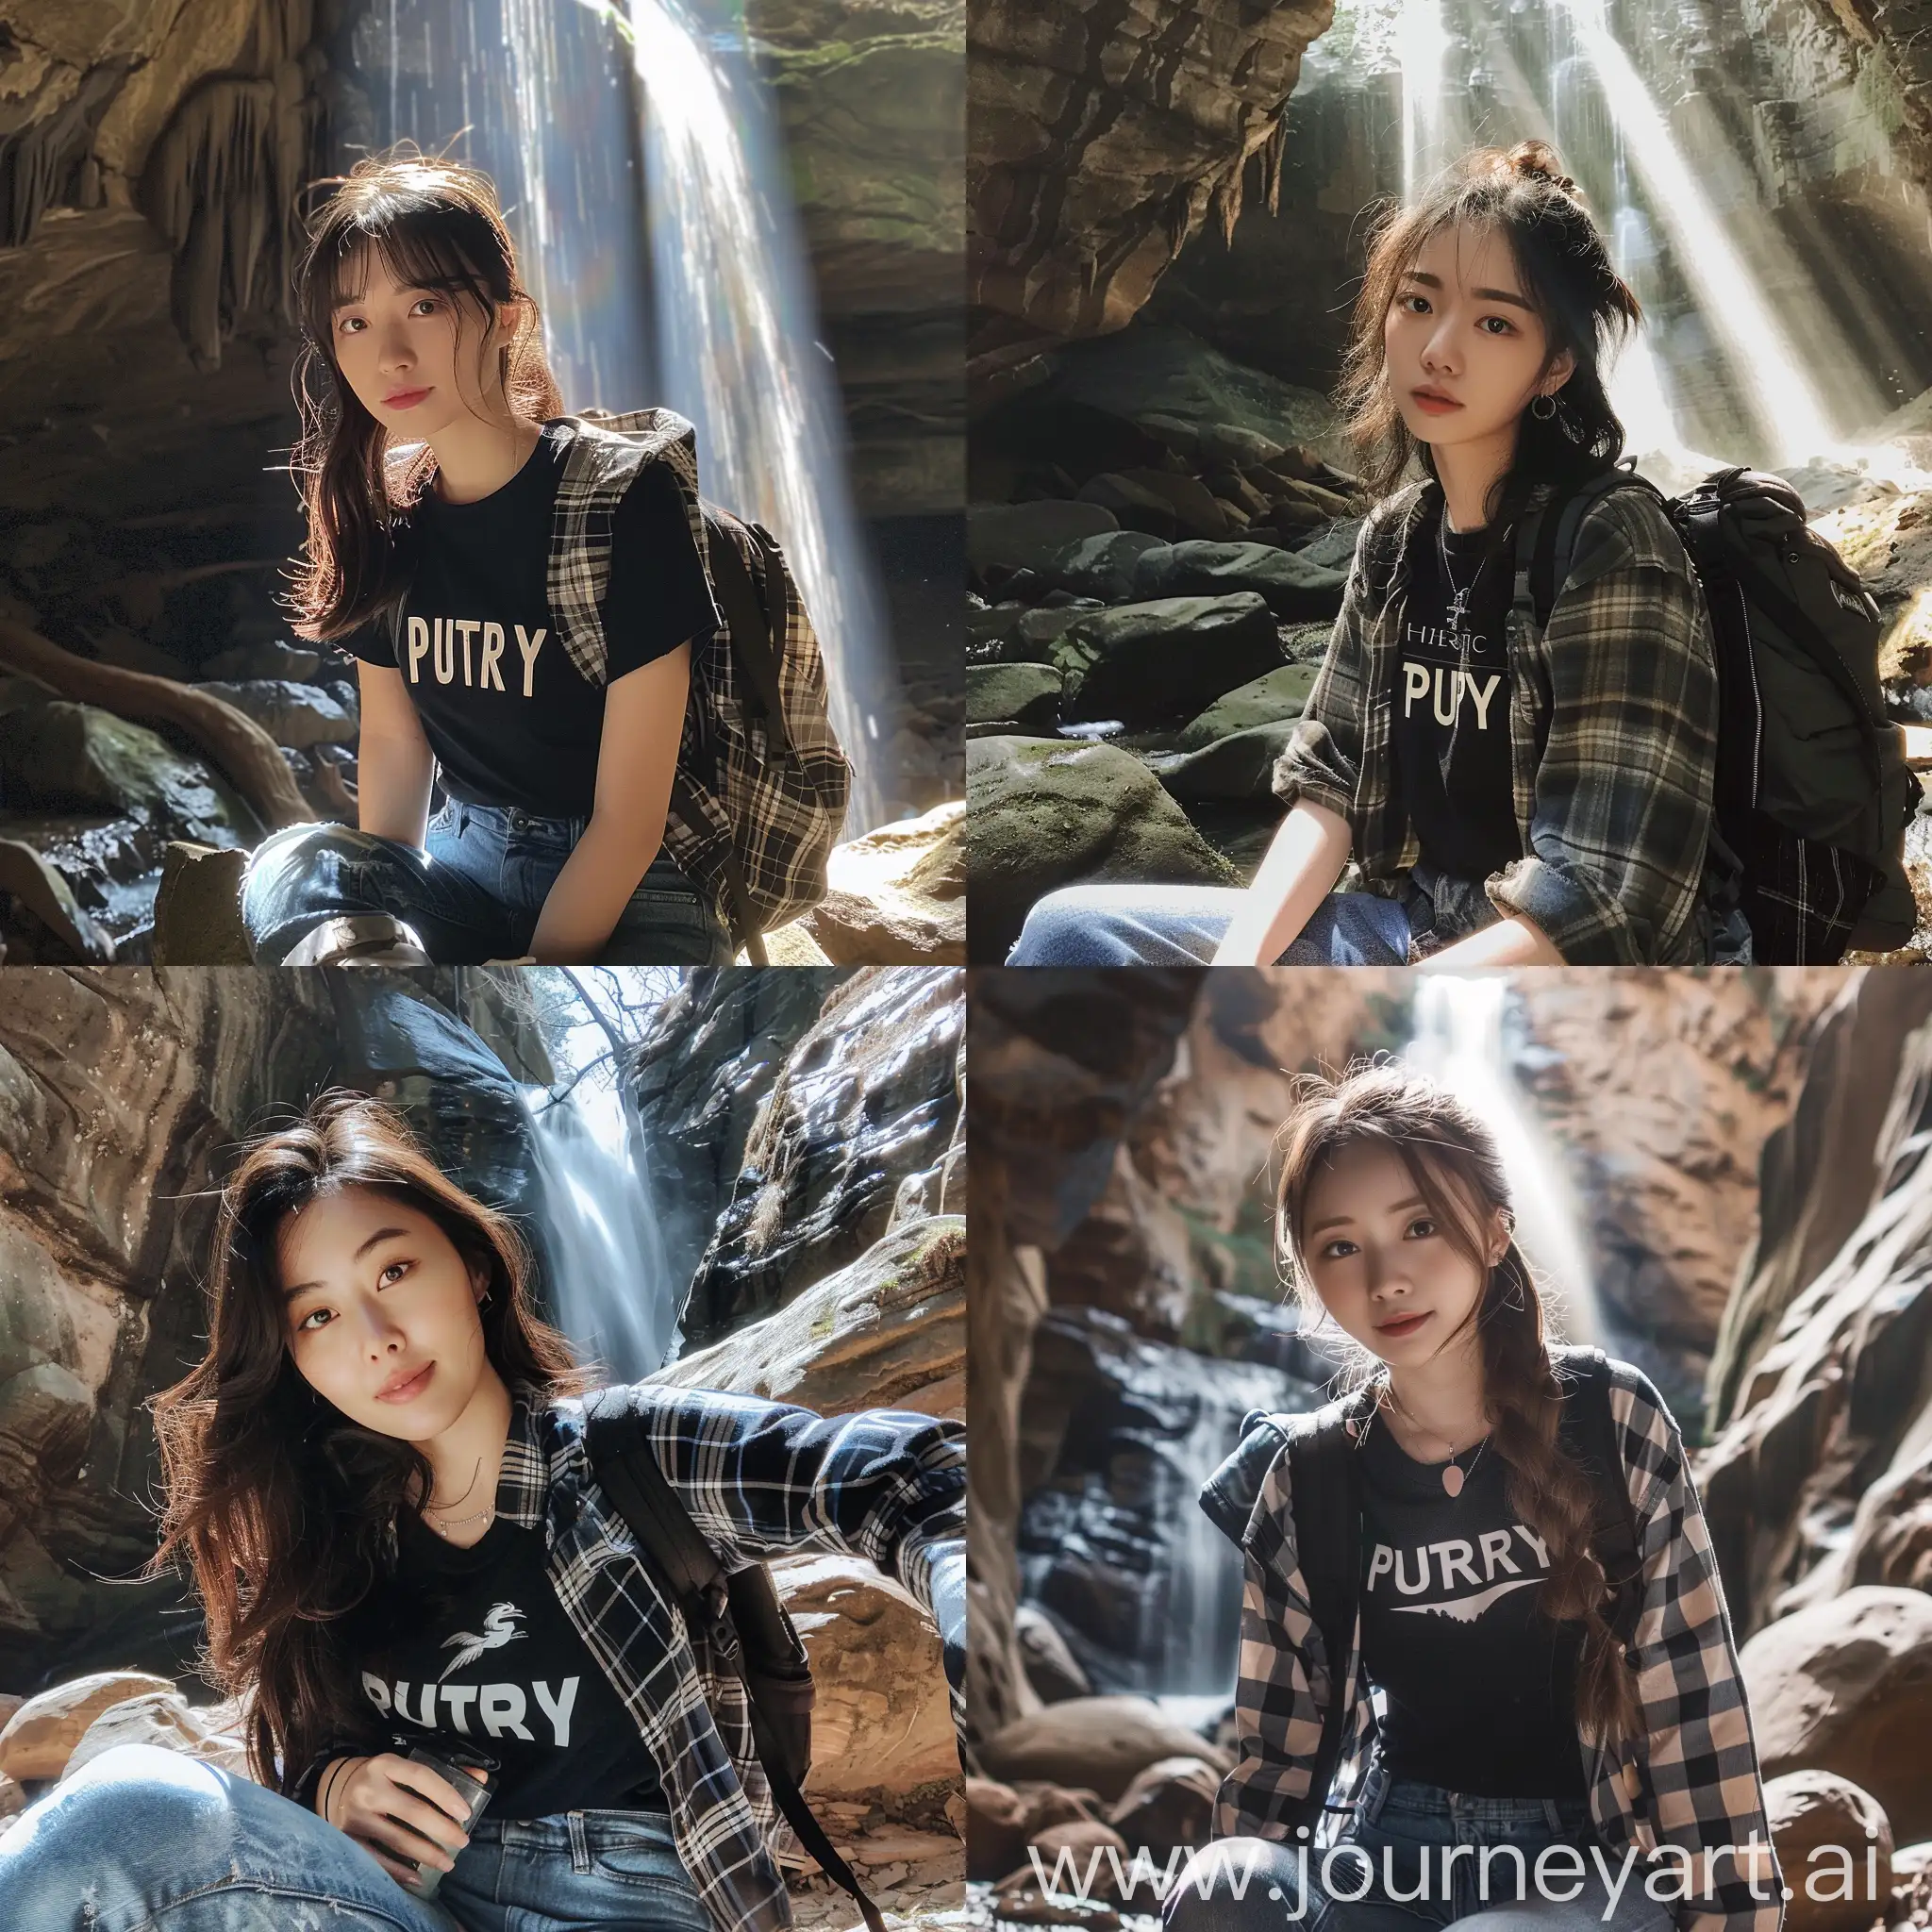 Young-Korean-Woman-Taking-Selfie-in-Cave-near-Waterfall